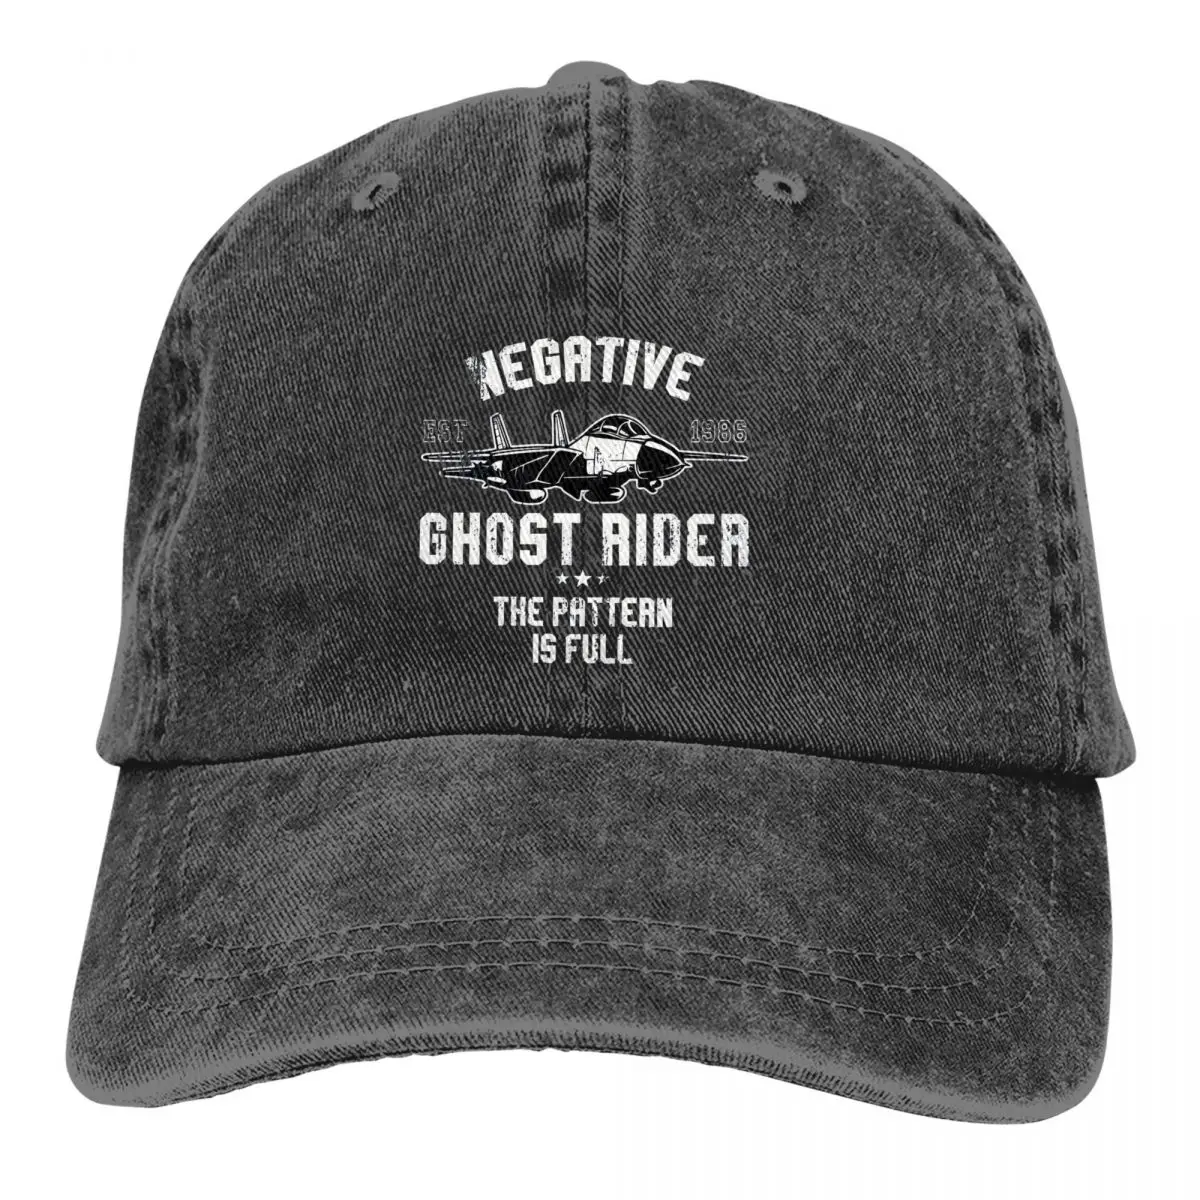 

Summer Cap Sun Visor Negative Ghost Rider Hip Hop Caps Top Gun Maverick Goose Film Cowboy Hat Peaked Trucker Dad Hats